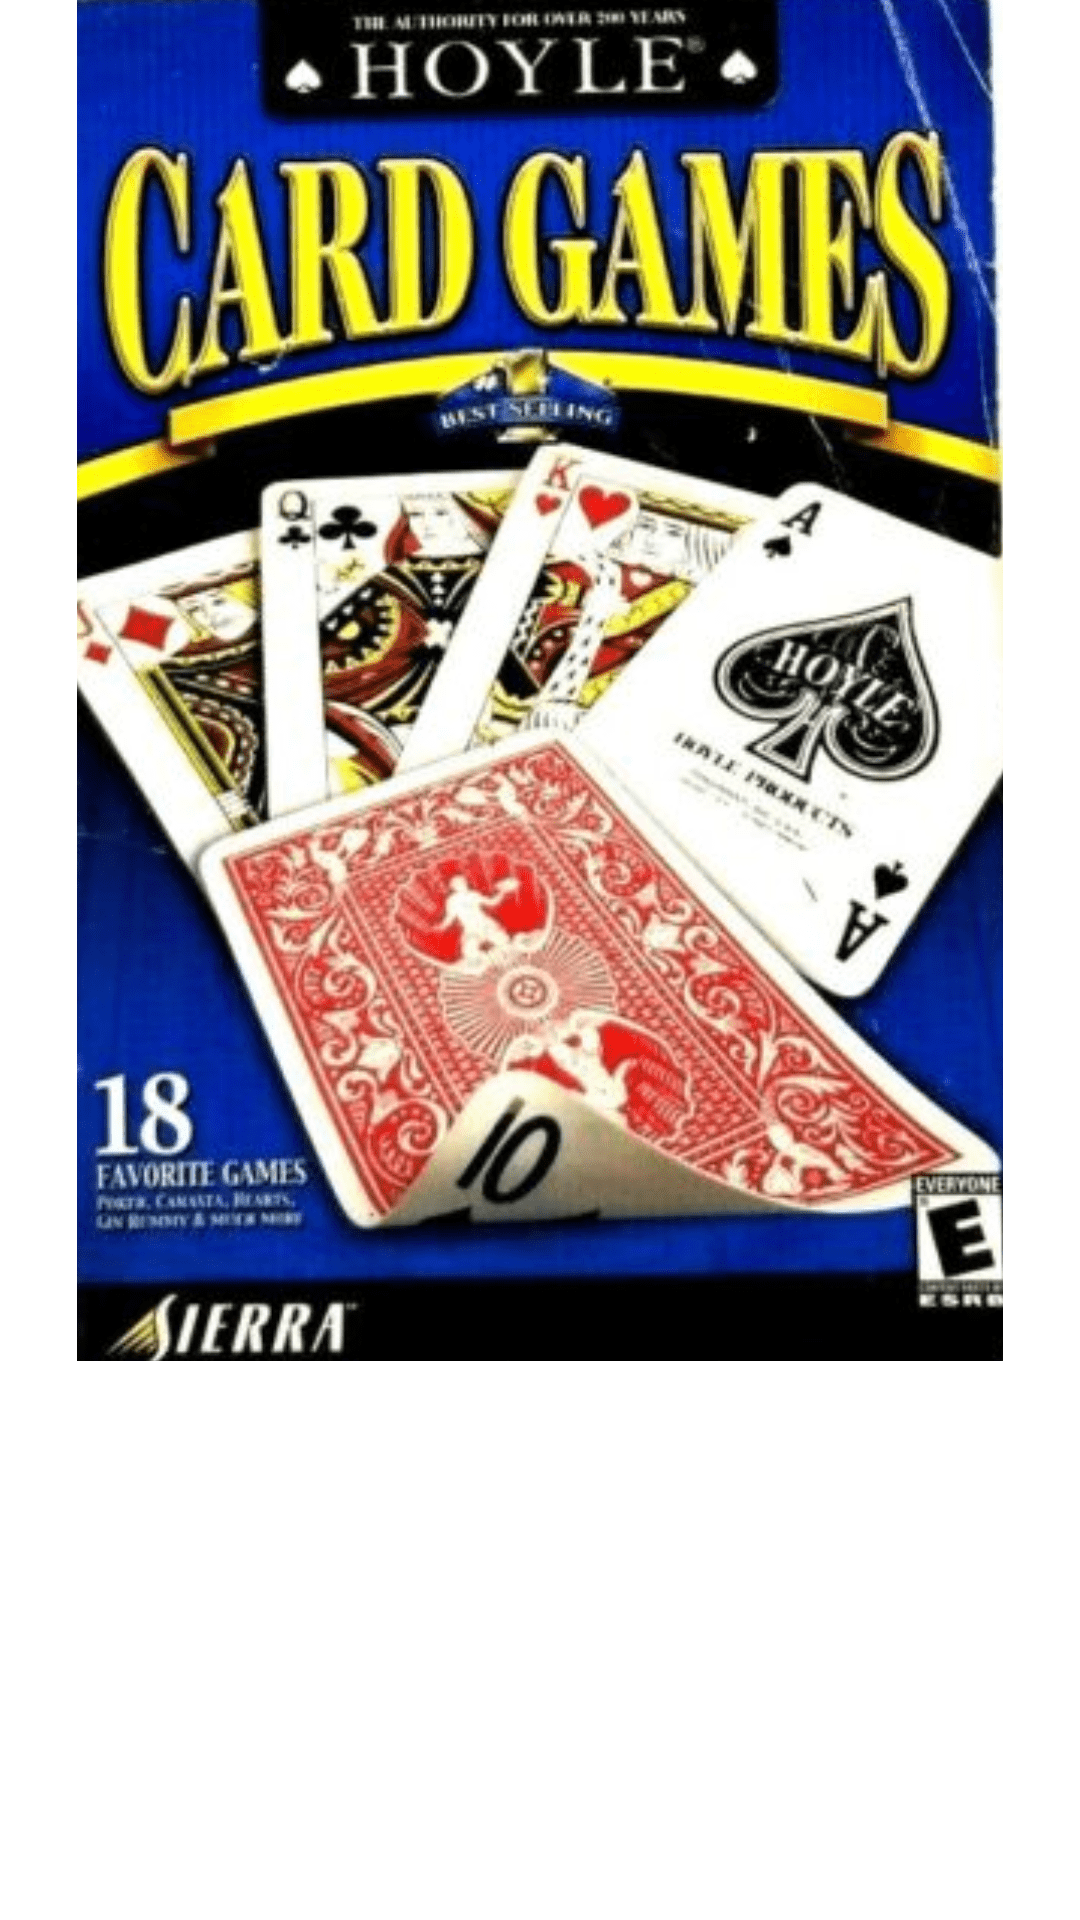 Hoyle Card Games: 18 Favorite Games